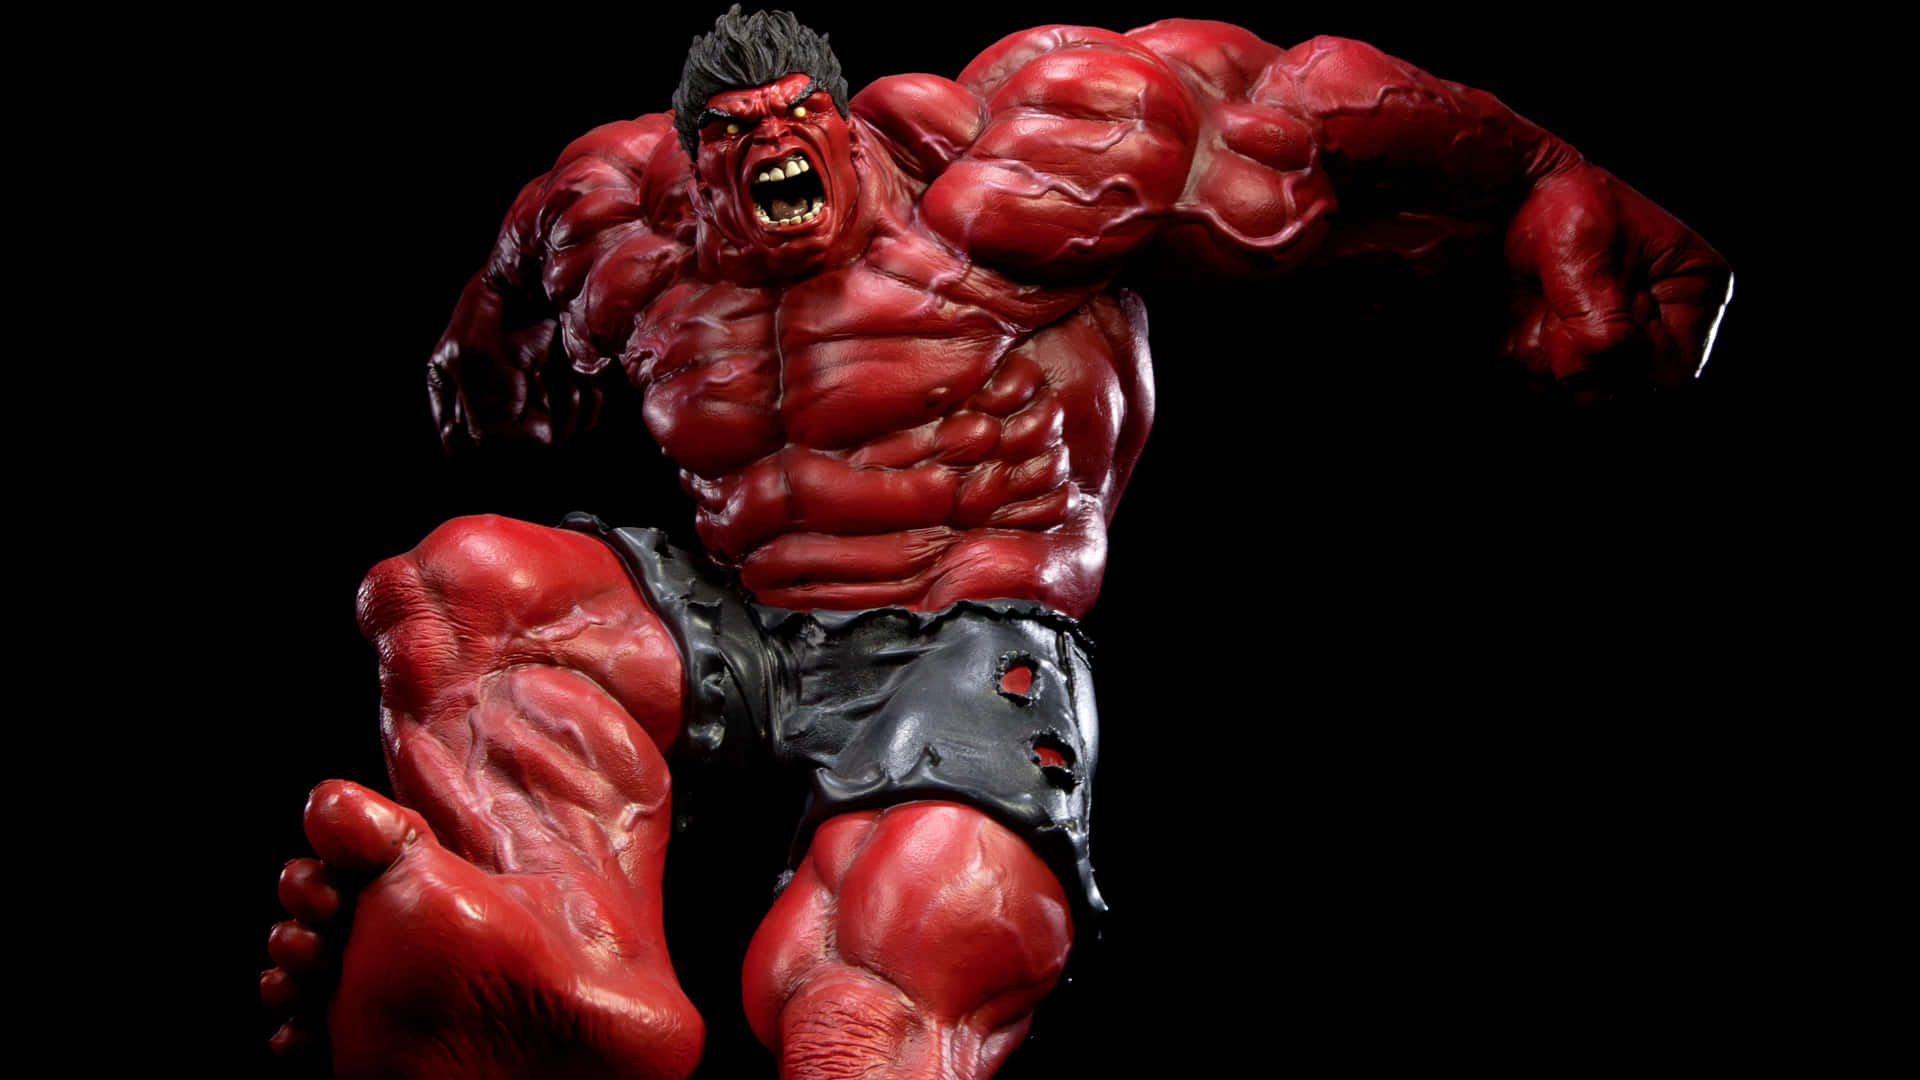 Red Hulk Roaring Figure Wallpaper